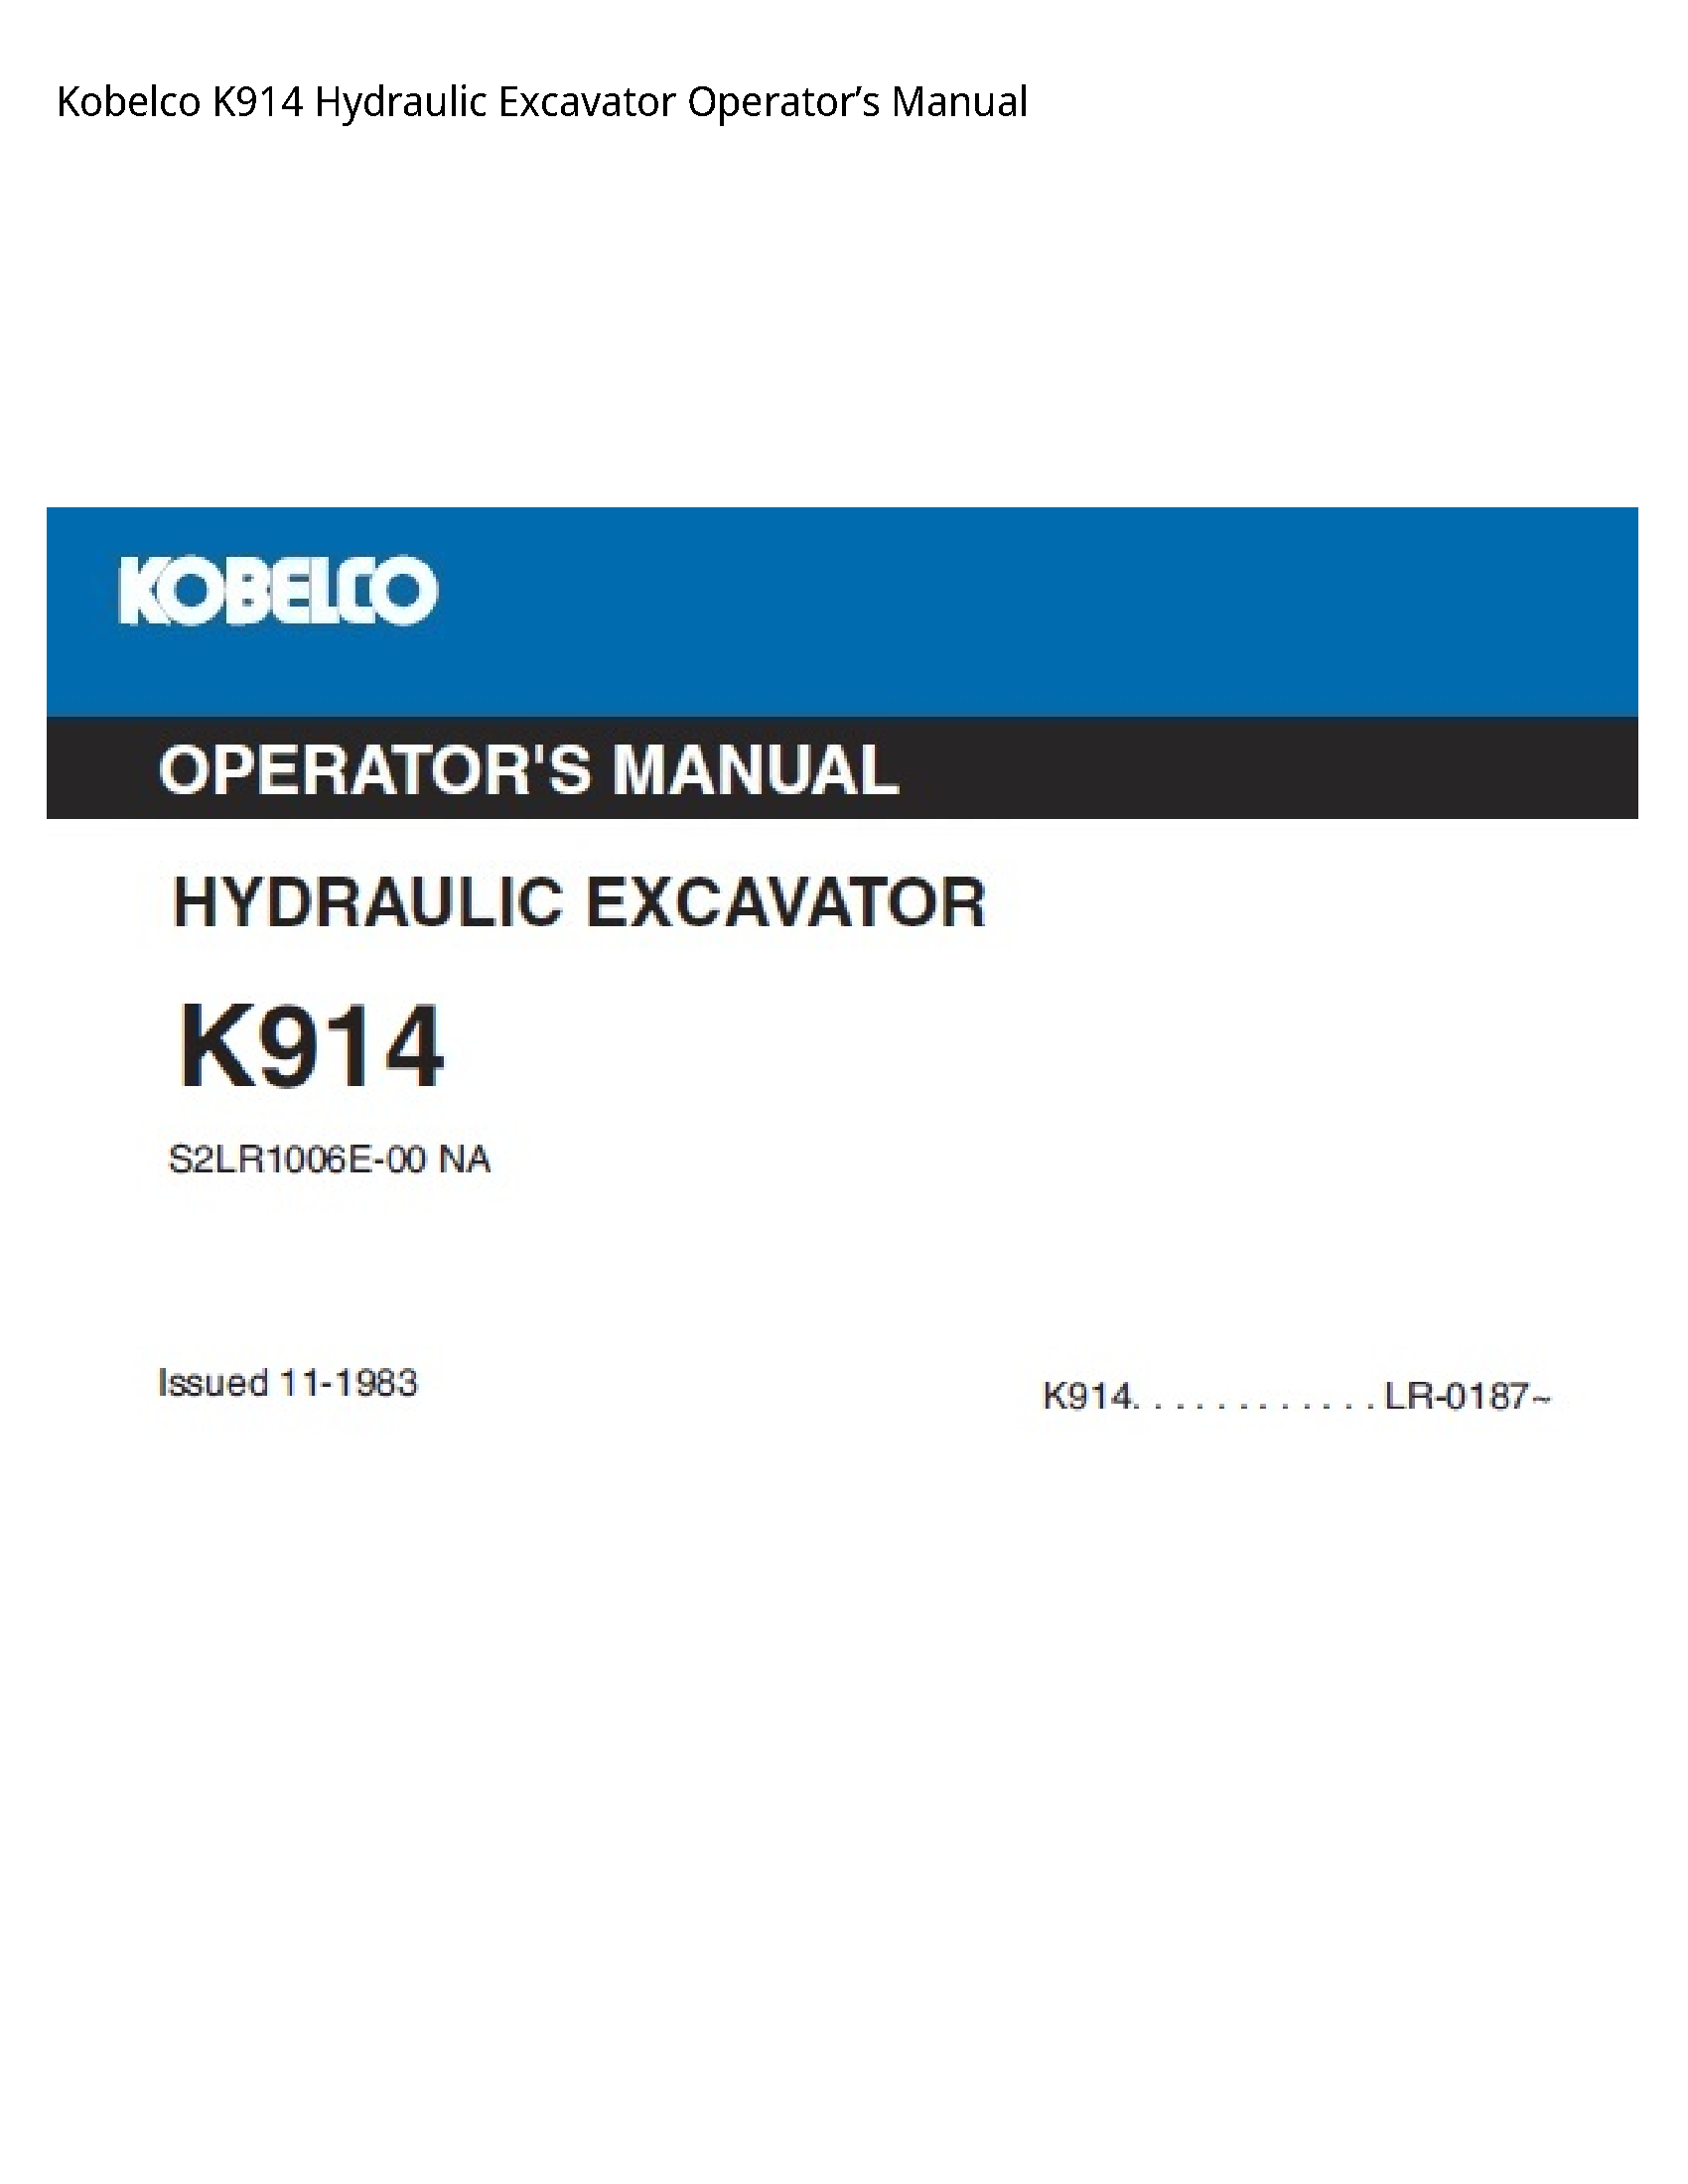 Kobelco K914 Hydraulic Excavator Operator’s manual